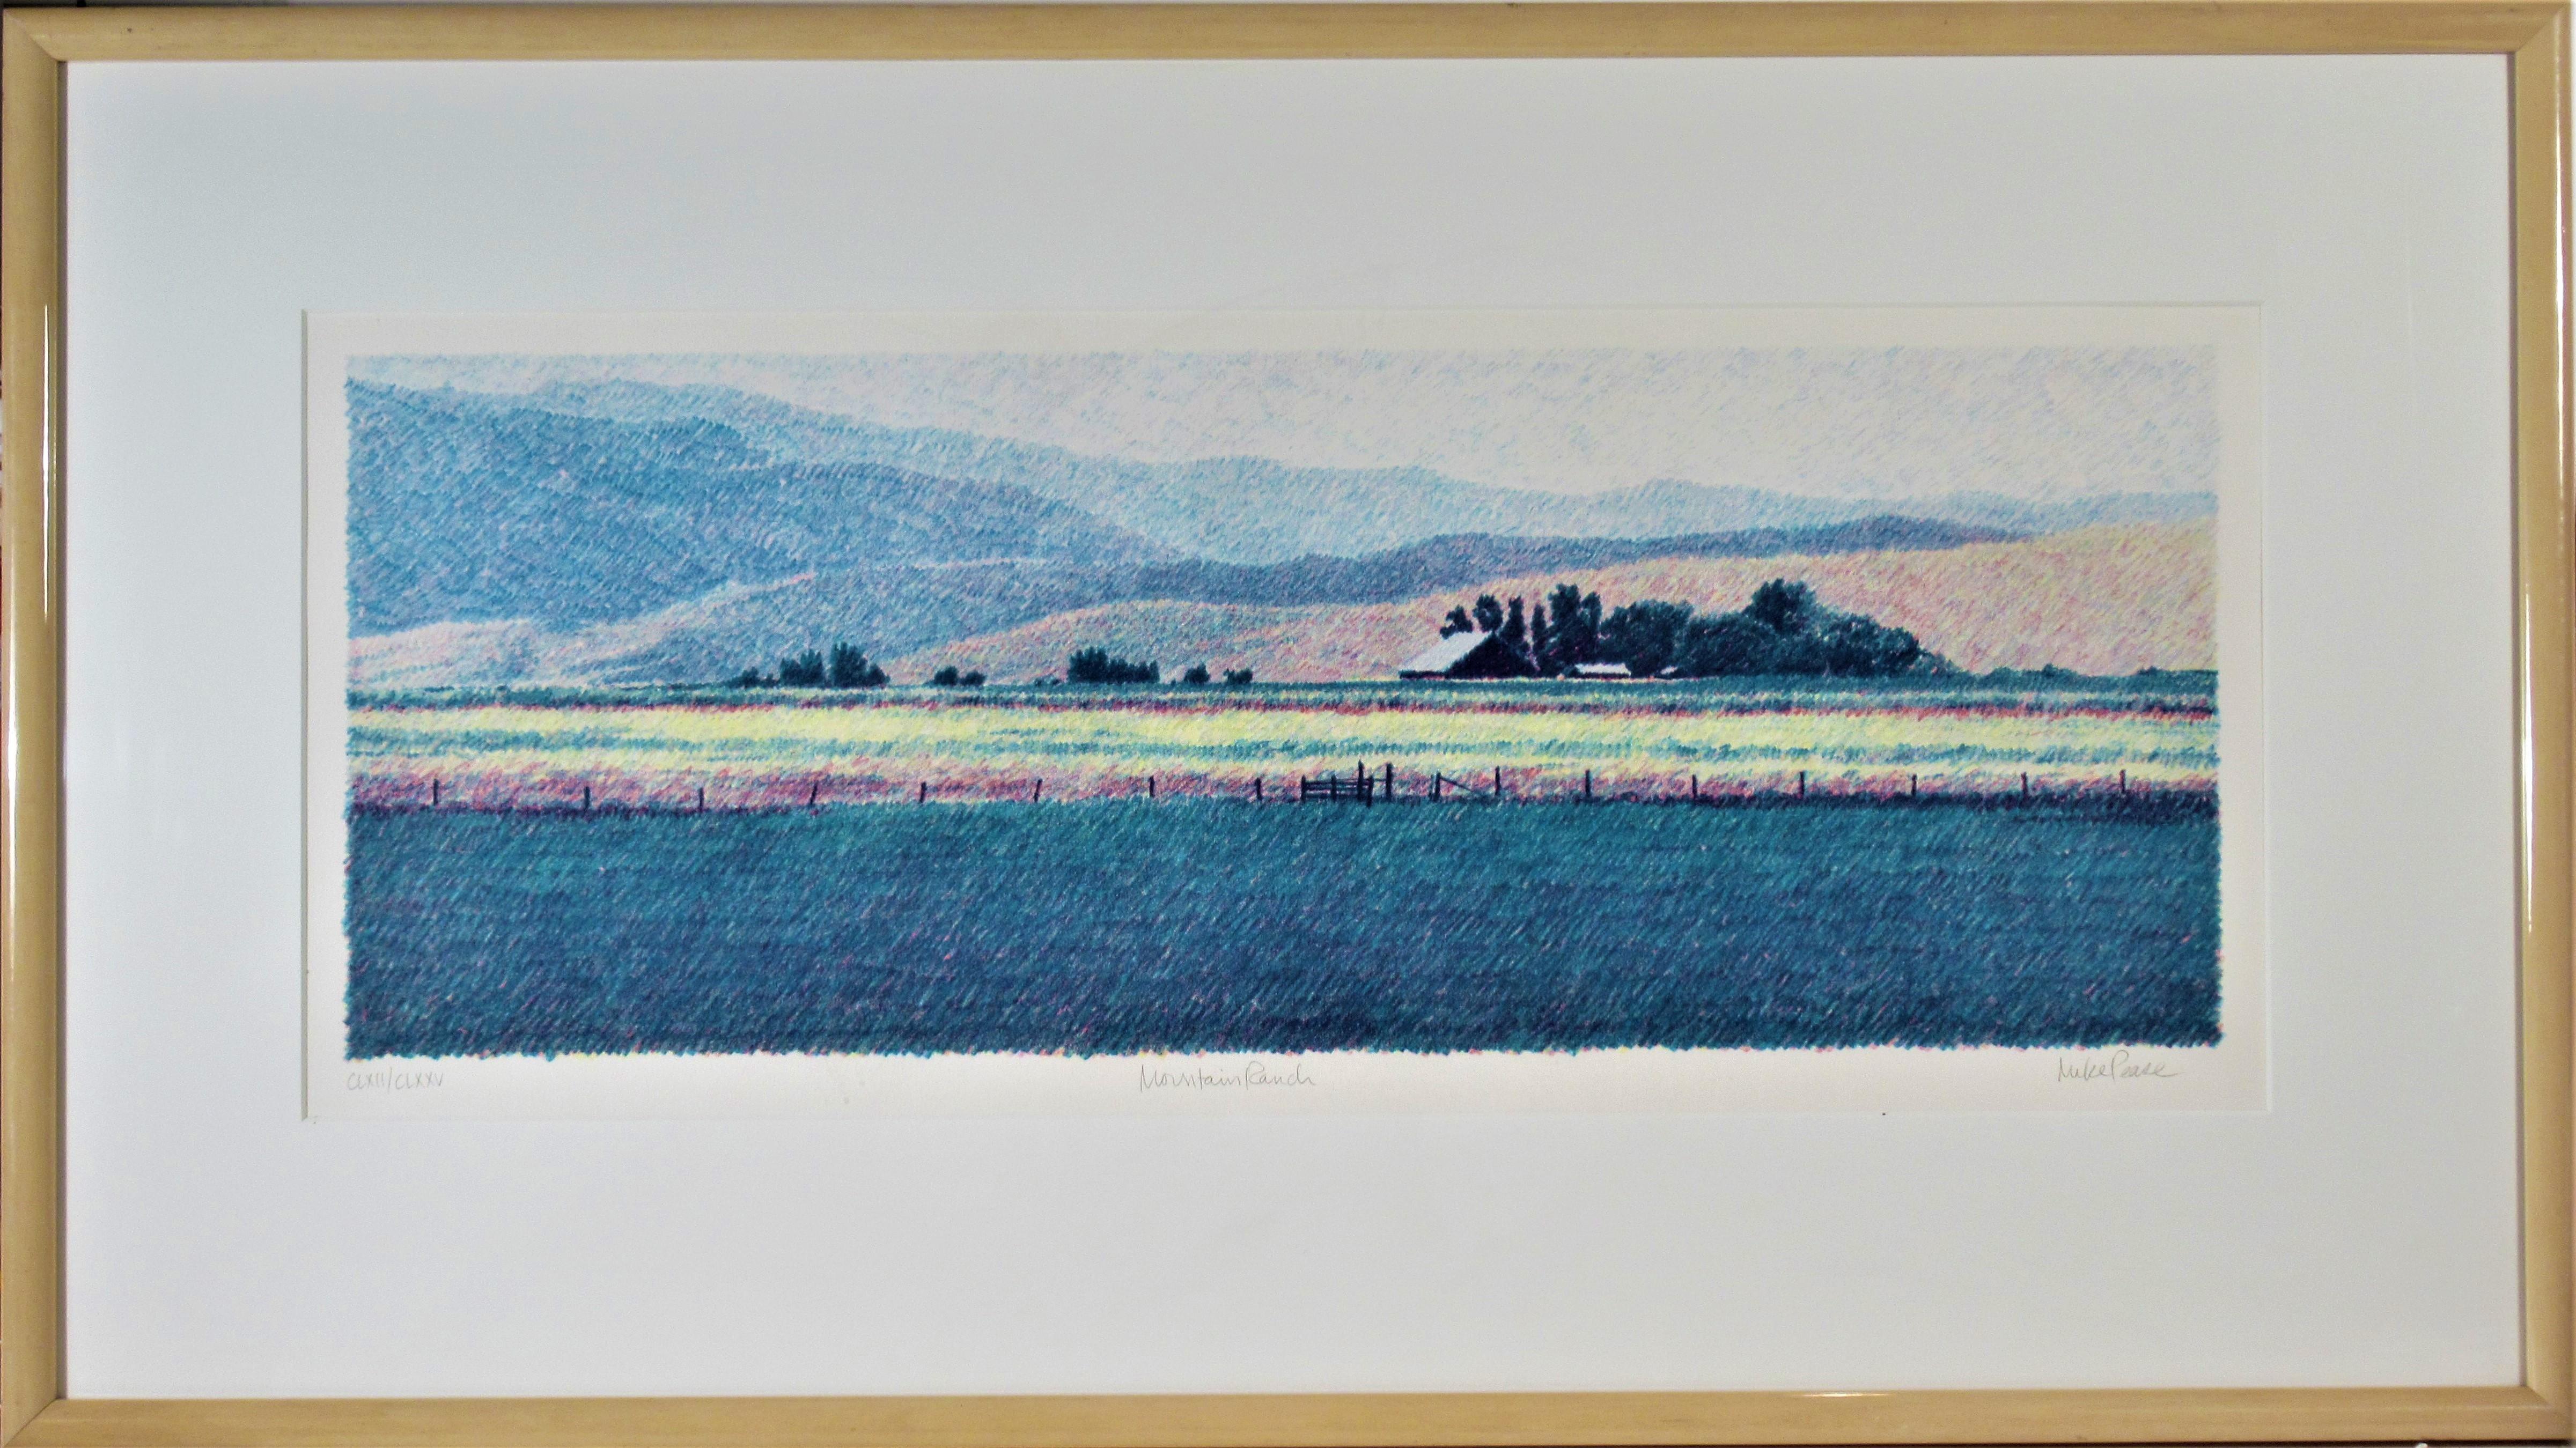 Michael (Mike) Pease Landscape Print - "Mountain Ranch" - Large color lithograph